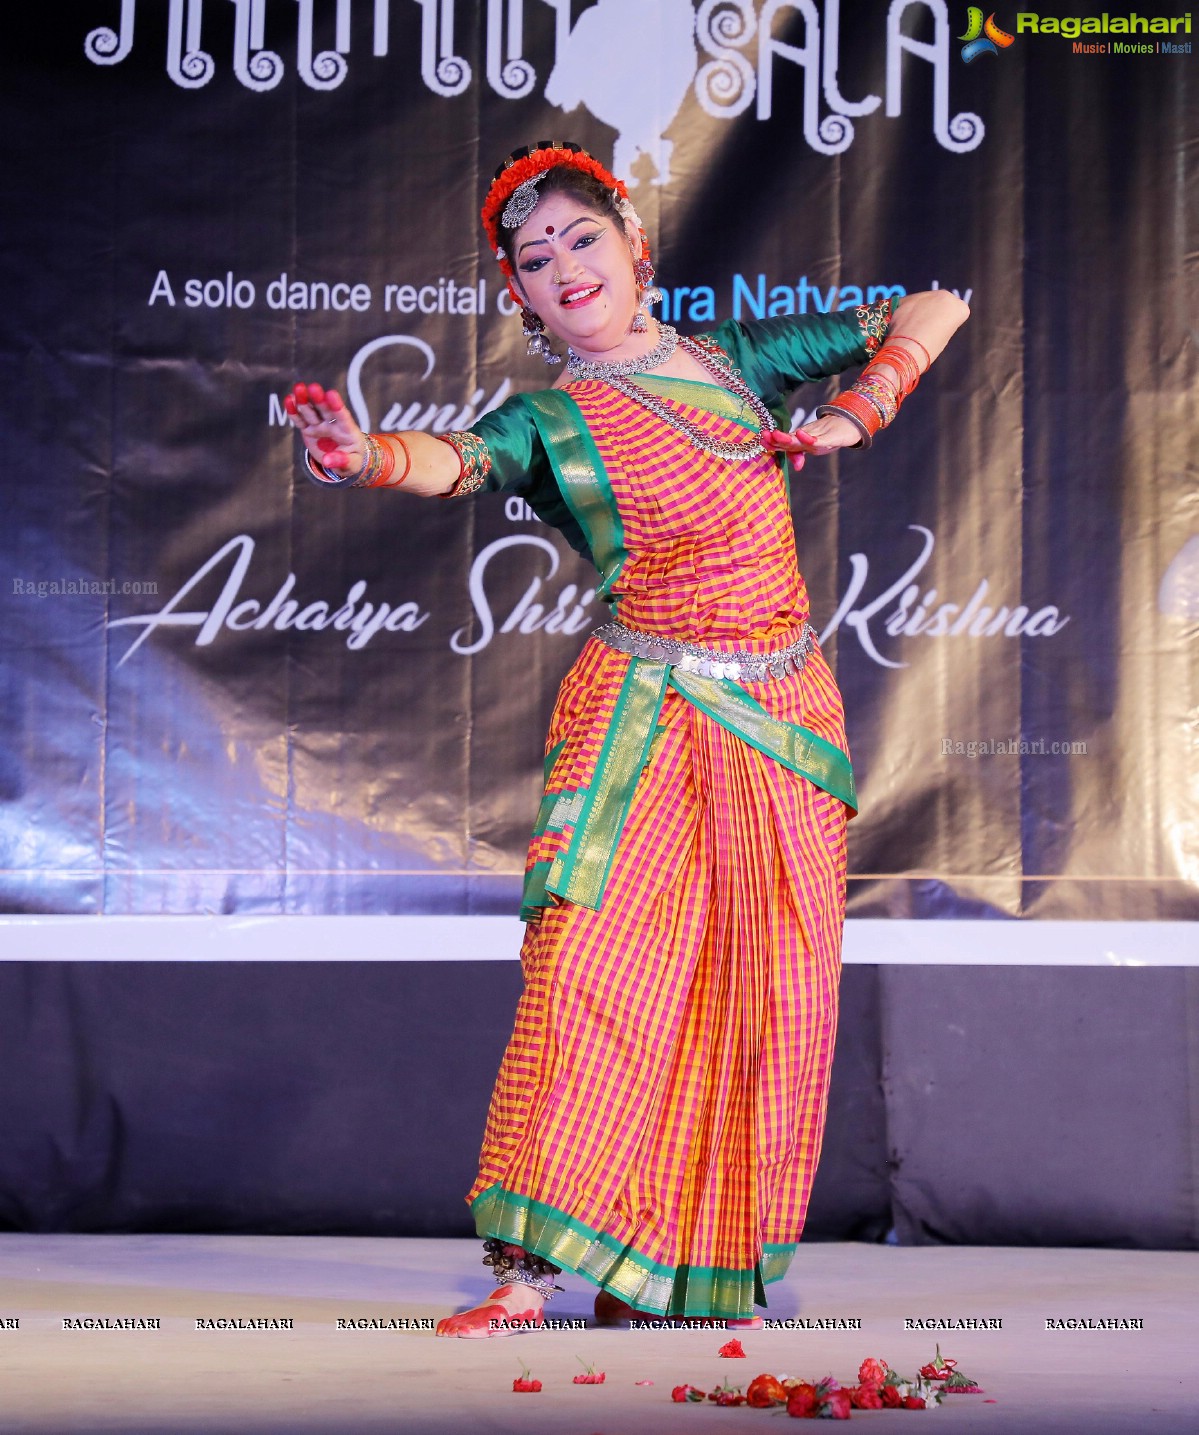 Ms Sunila Gollapudi Presents Andhra Natyam & Golla Kalapam Dance Recital